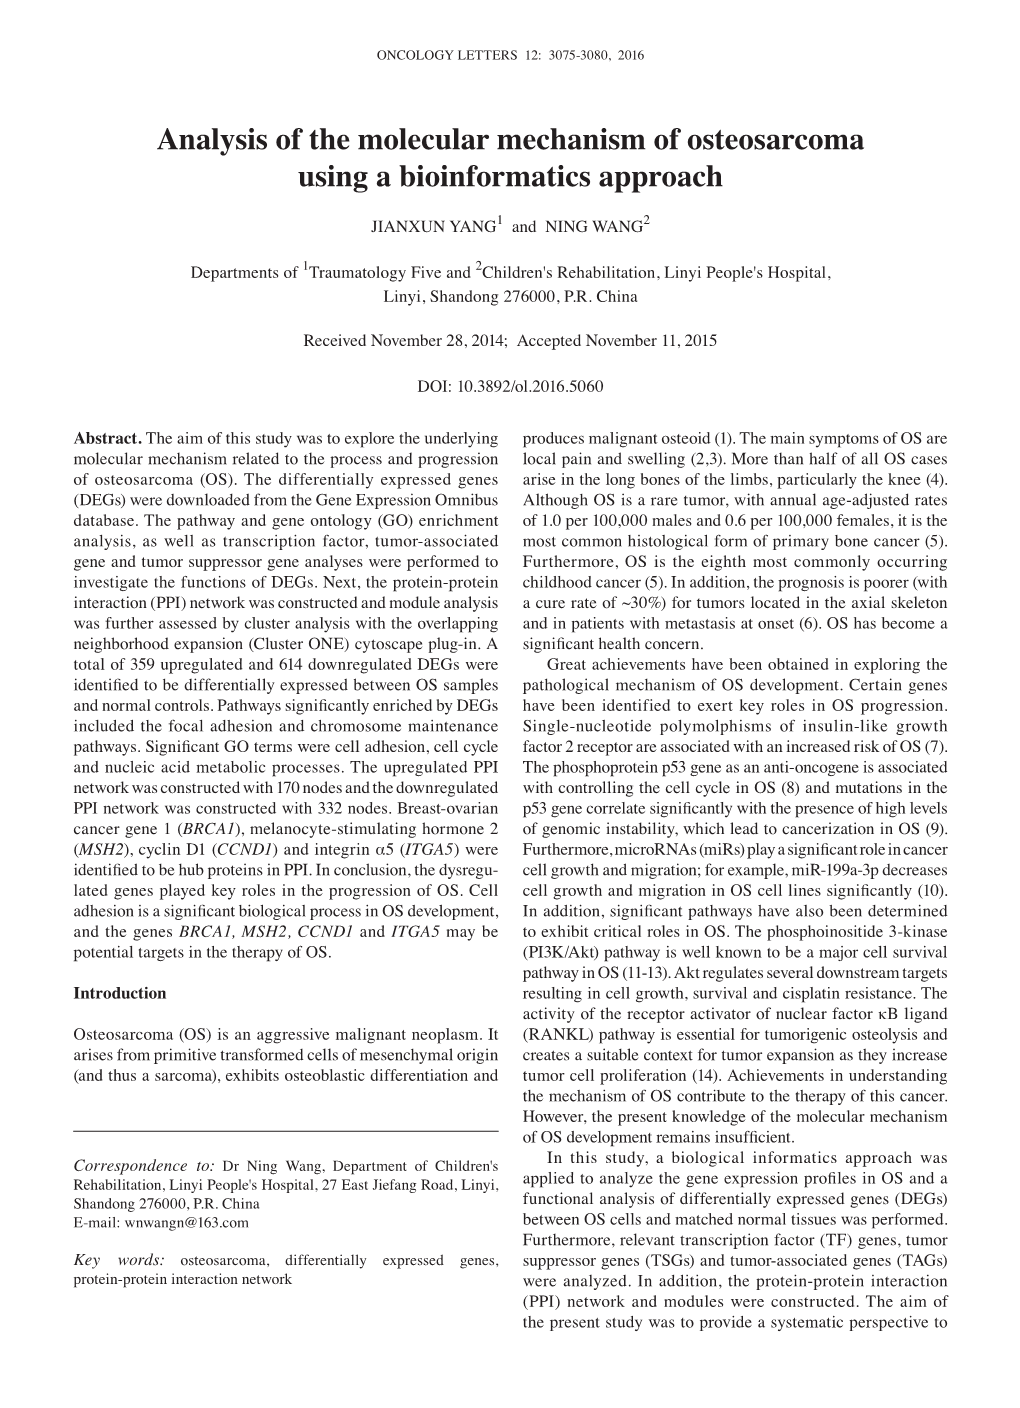 Analysis of the Molecular Mechanism of Osteosarcoma Using a Bioinformatics Approach